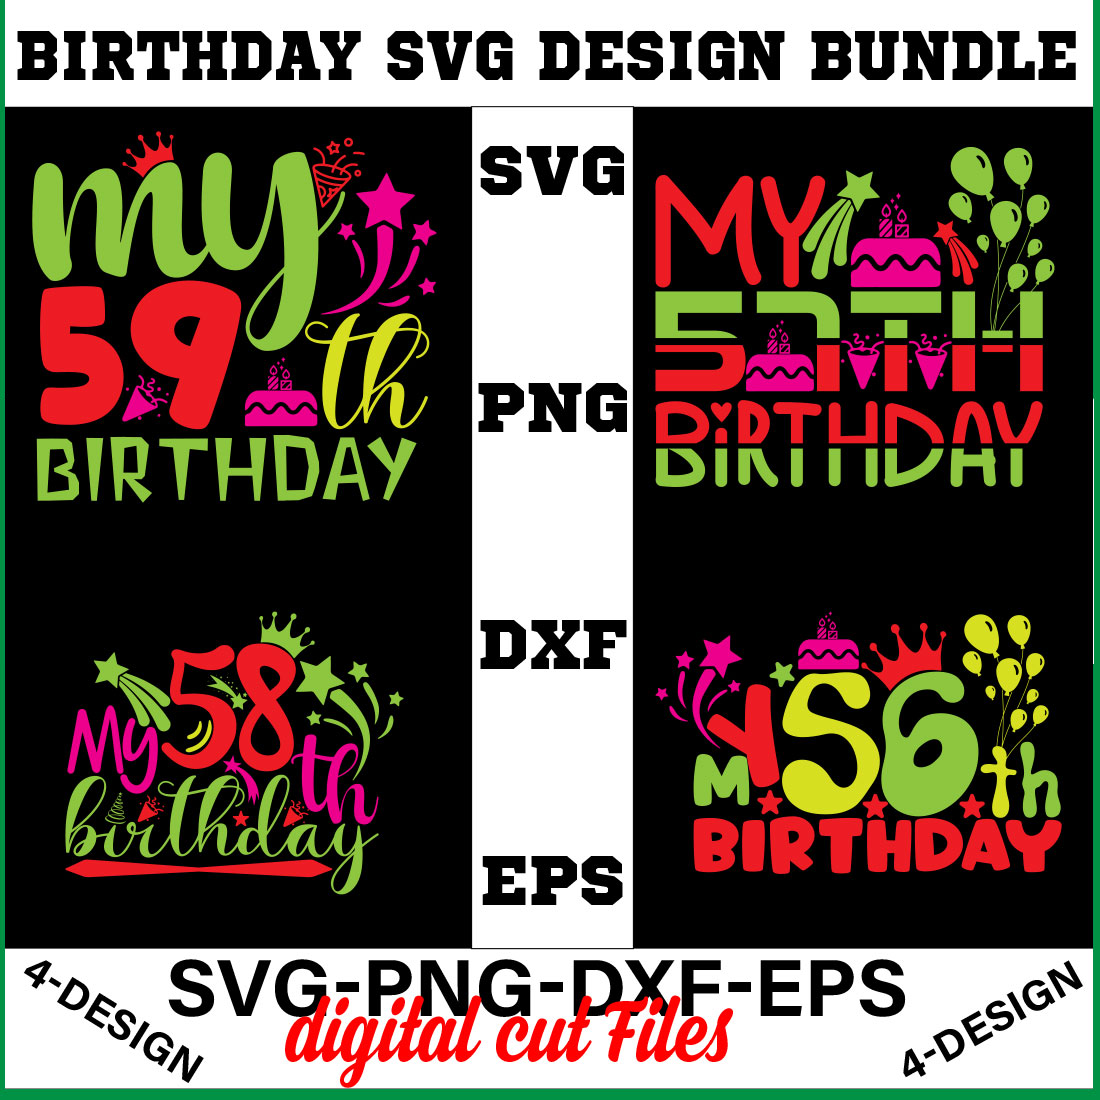 birthday svg design bundle Happy birthday svg bundle hand lettered birthday svg birthday party svg Volume-15 cover image.